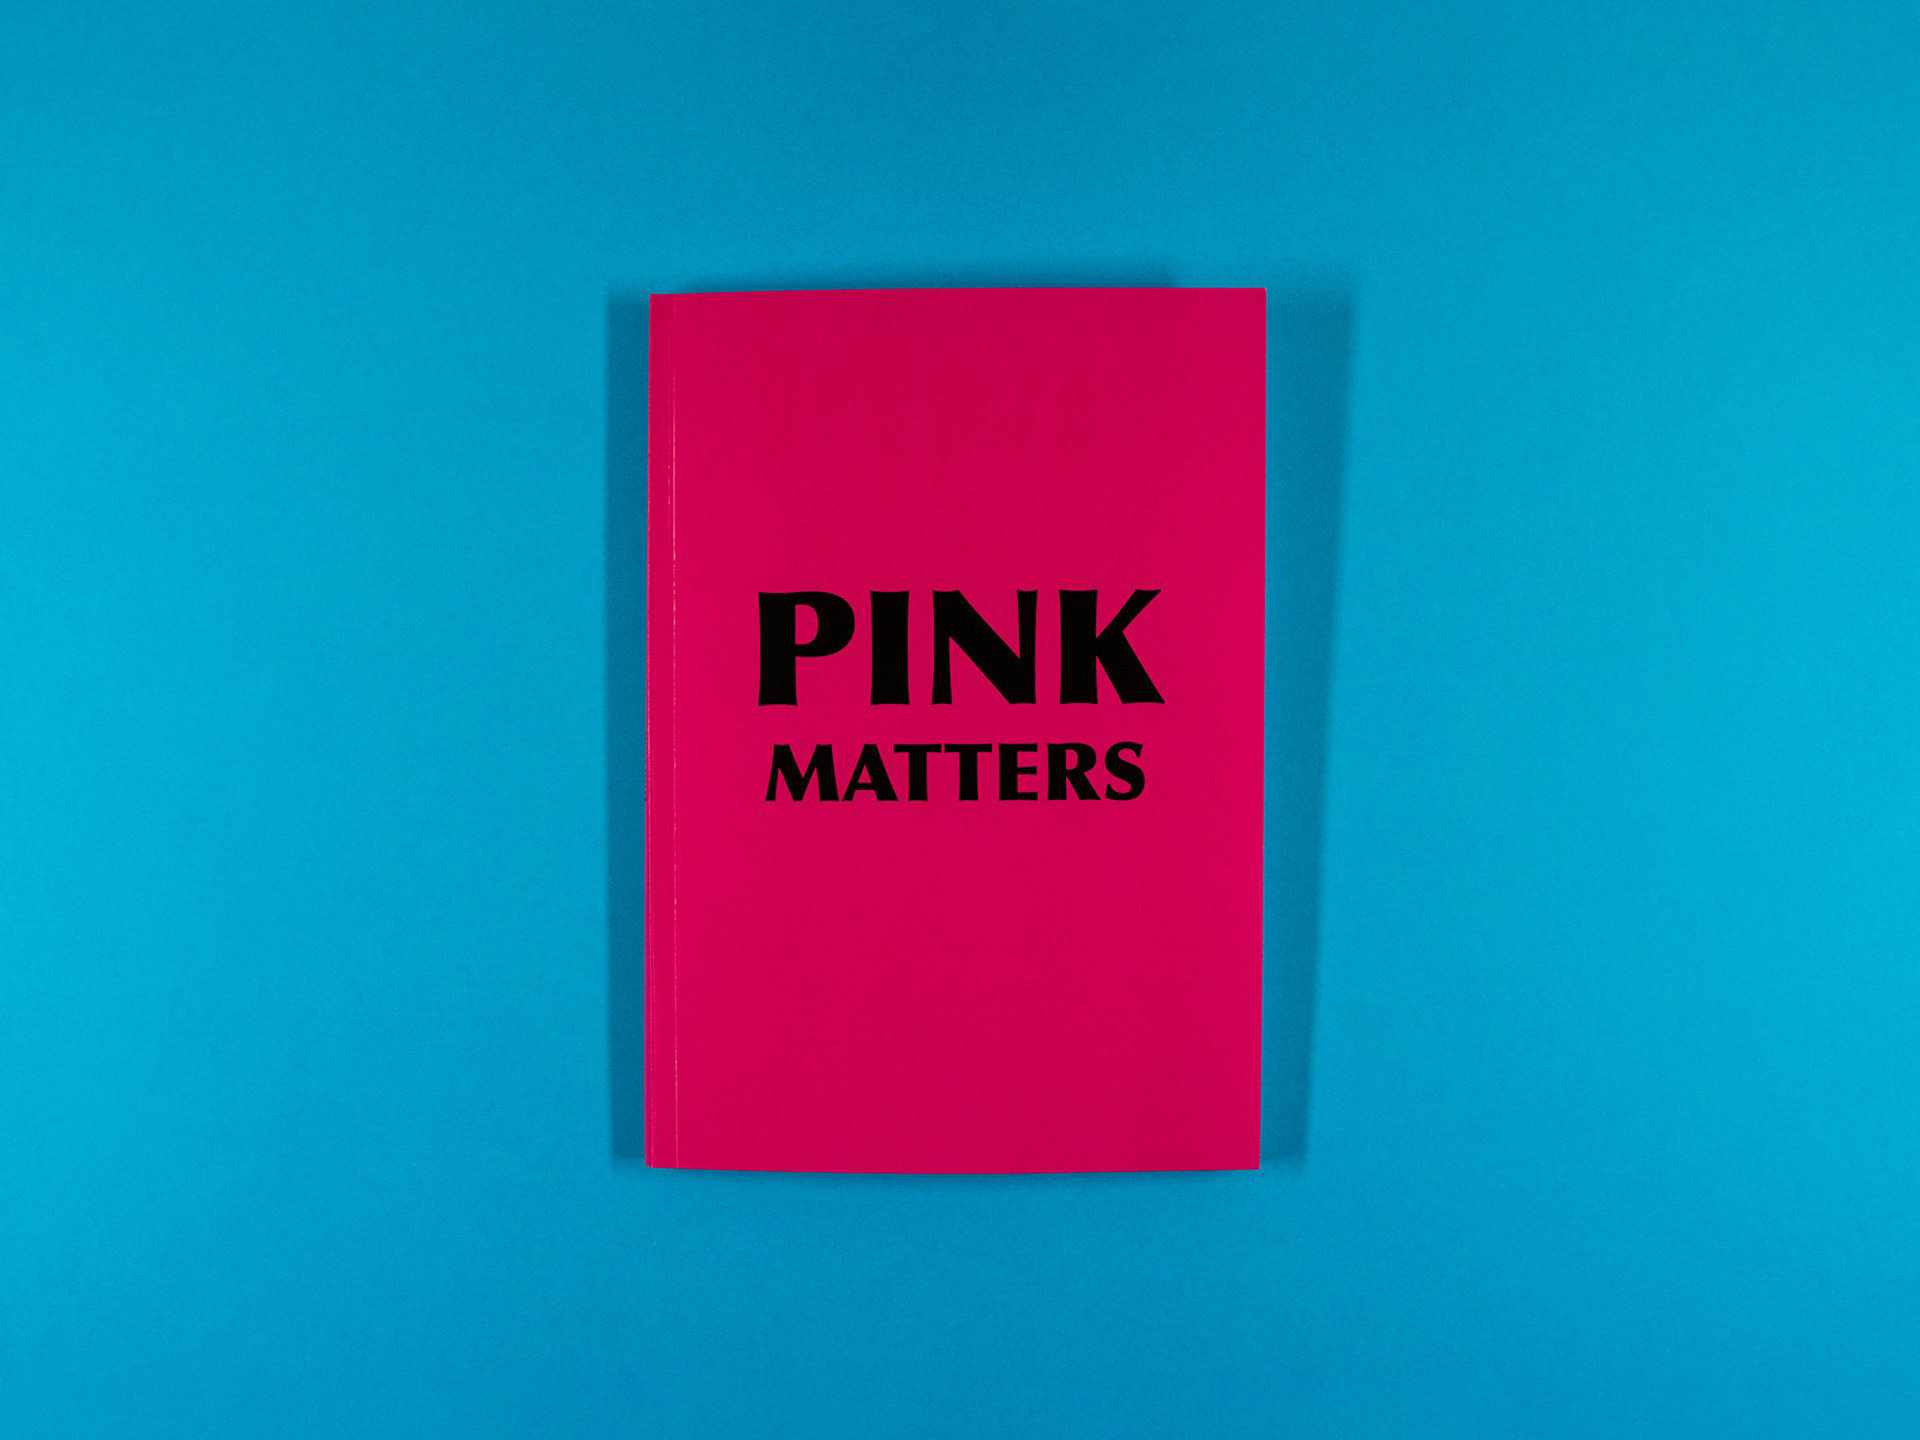 Pink matters